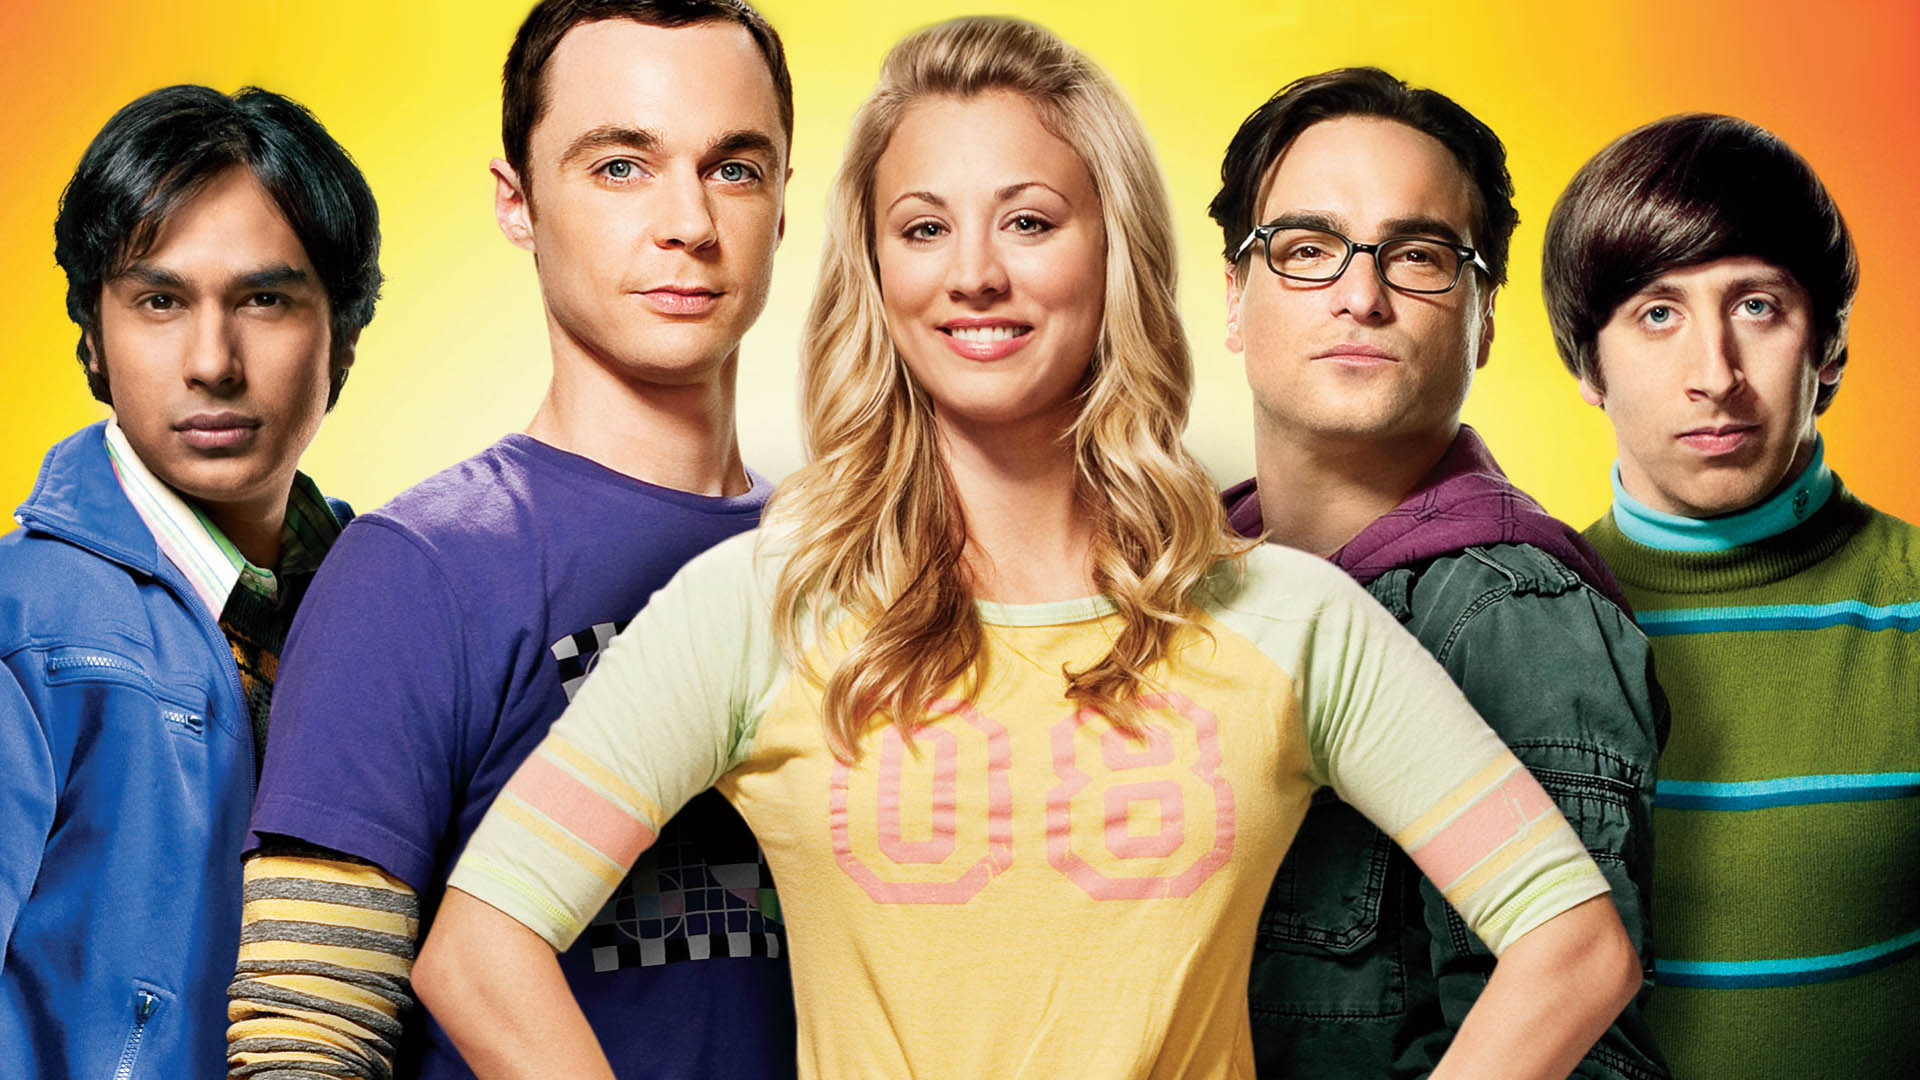 Images of The Big Bang Theory | 1920x1080